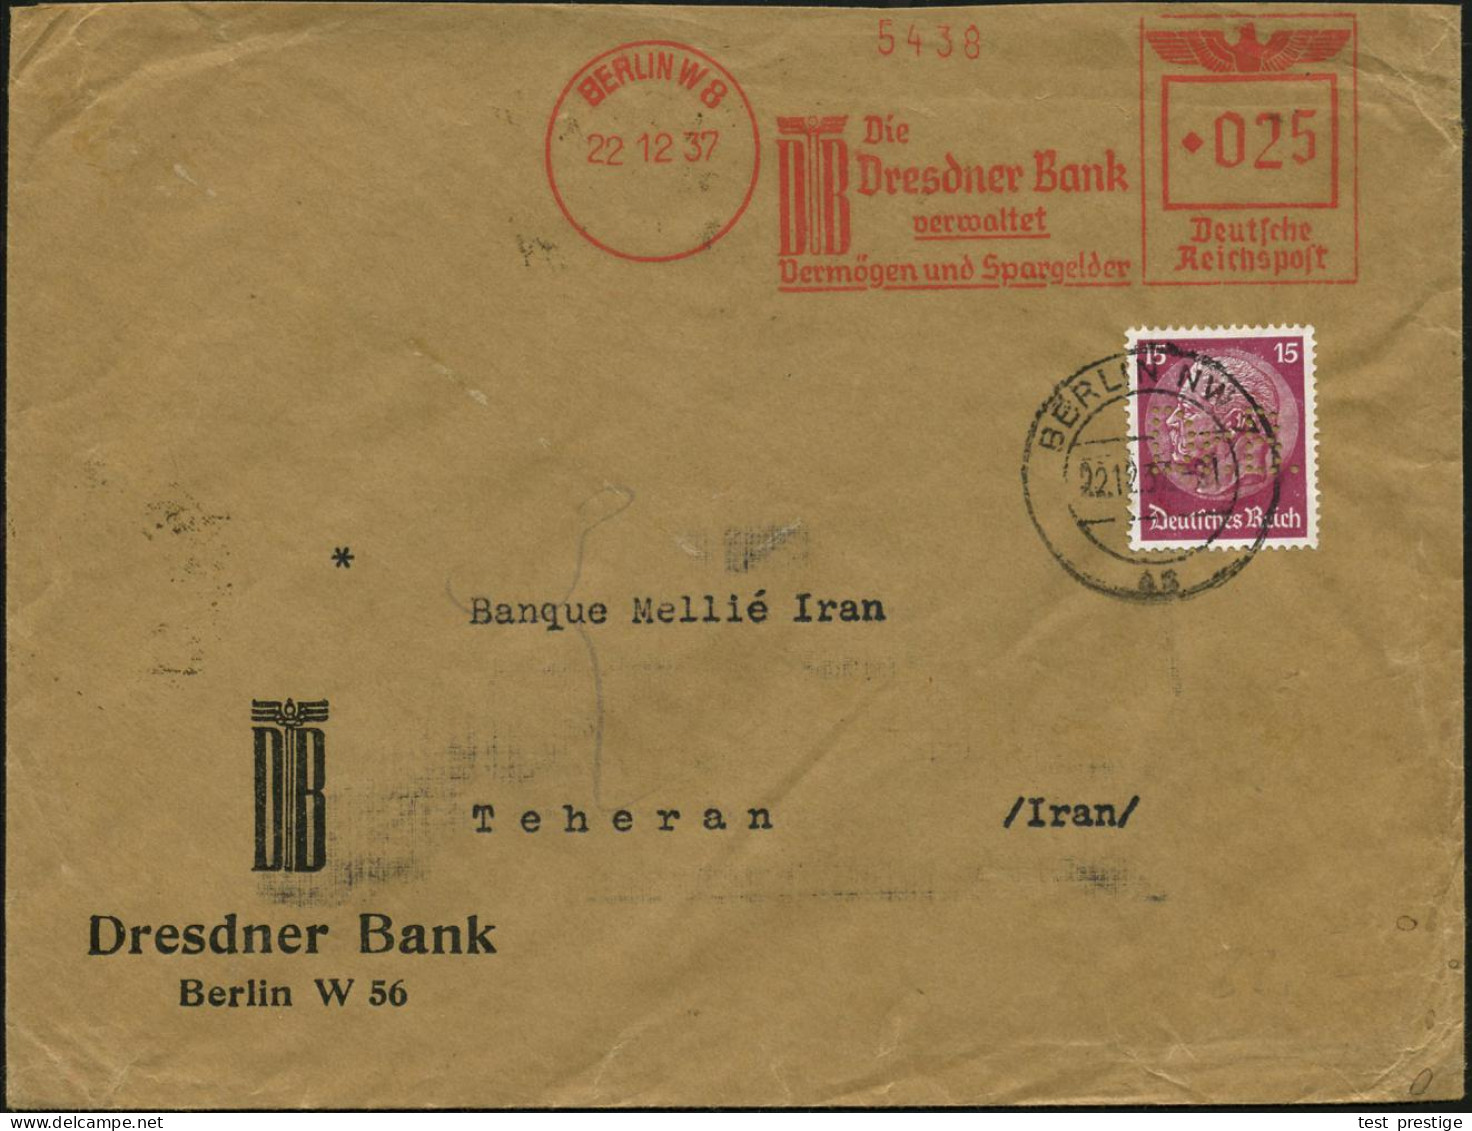 BERLIN W8/ DB/ Die/ Dresdner Bank/ Verwaltet/ Vermögen.. 1937 (22.12.) AFS Francotyp 025 Pf. Francotyp "Reichsadler" + 1 - Otros